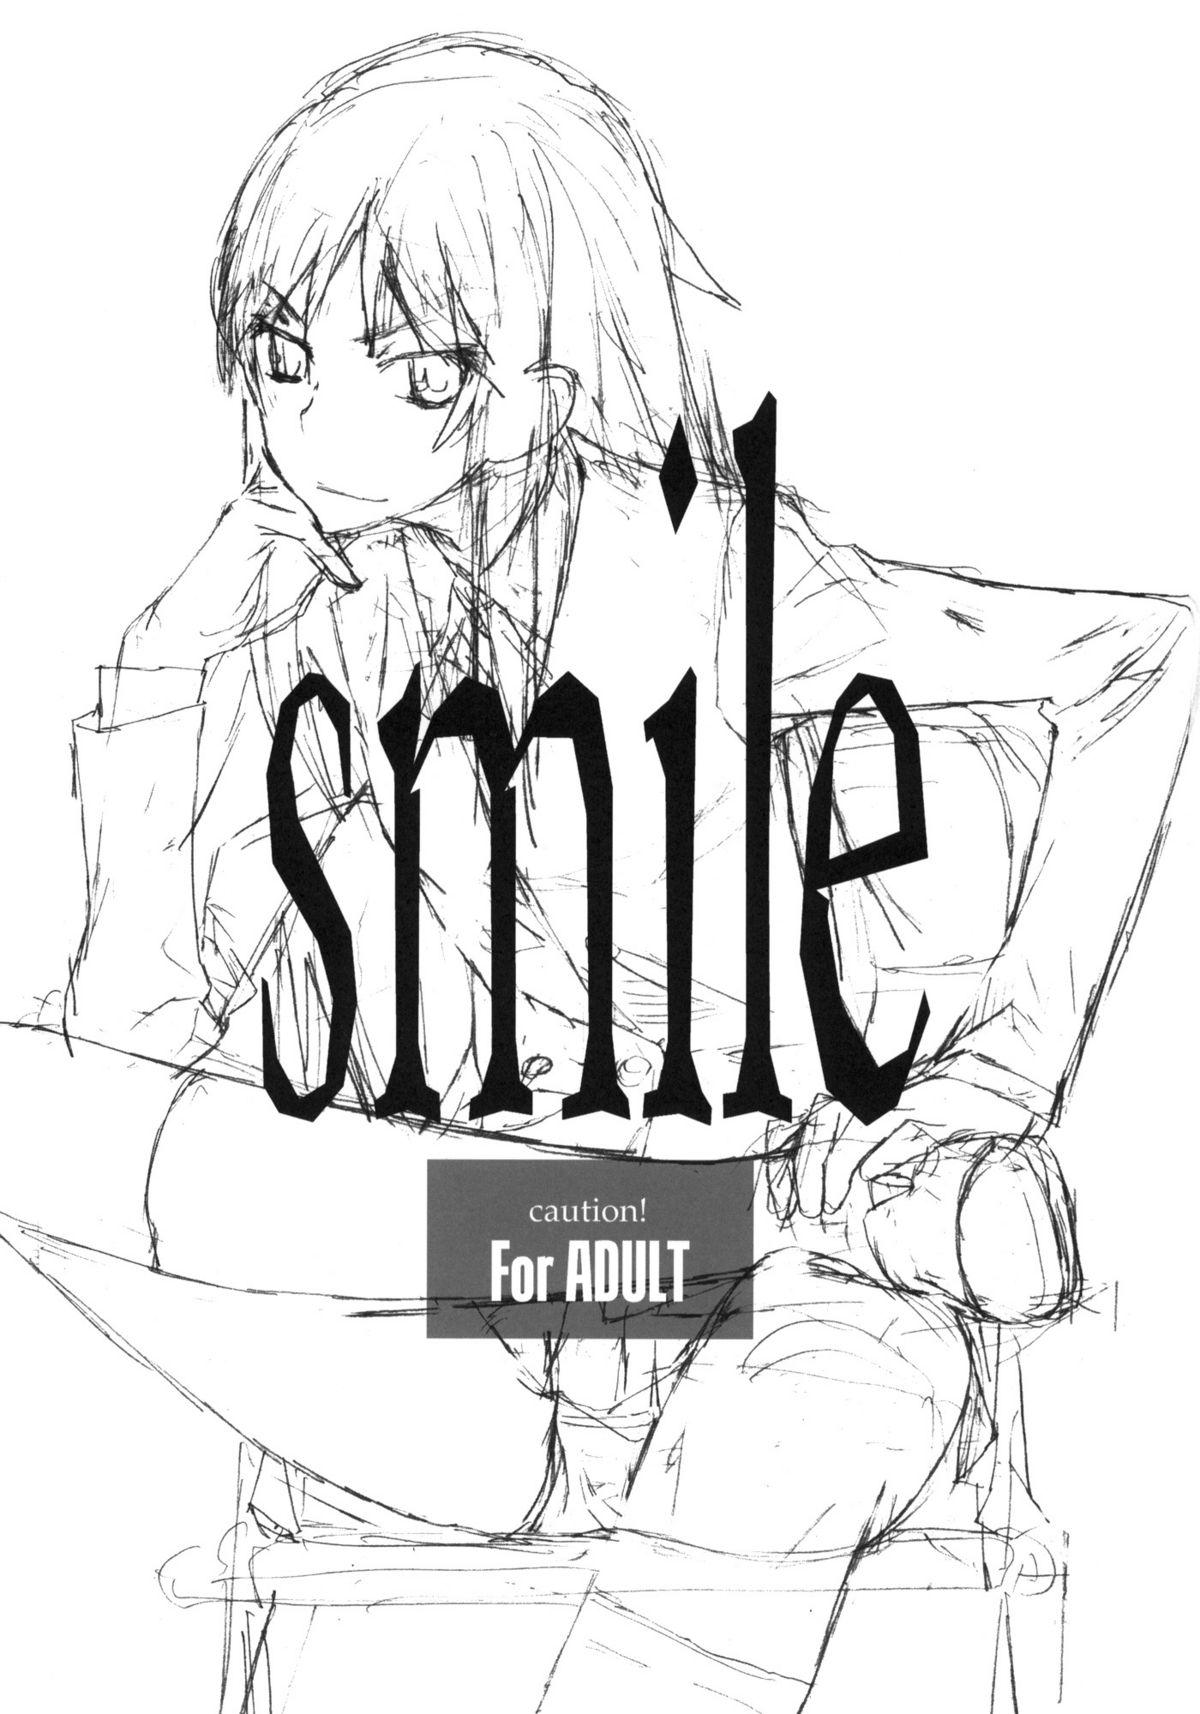 Smile 1